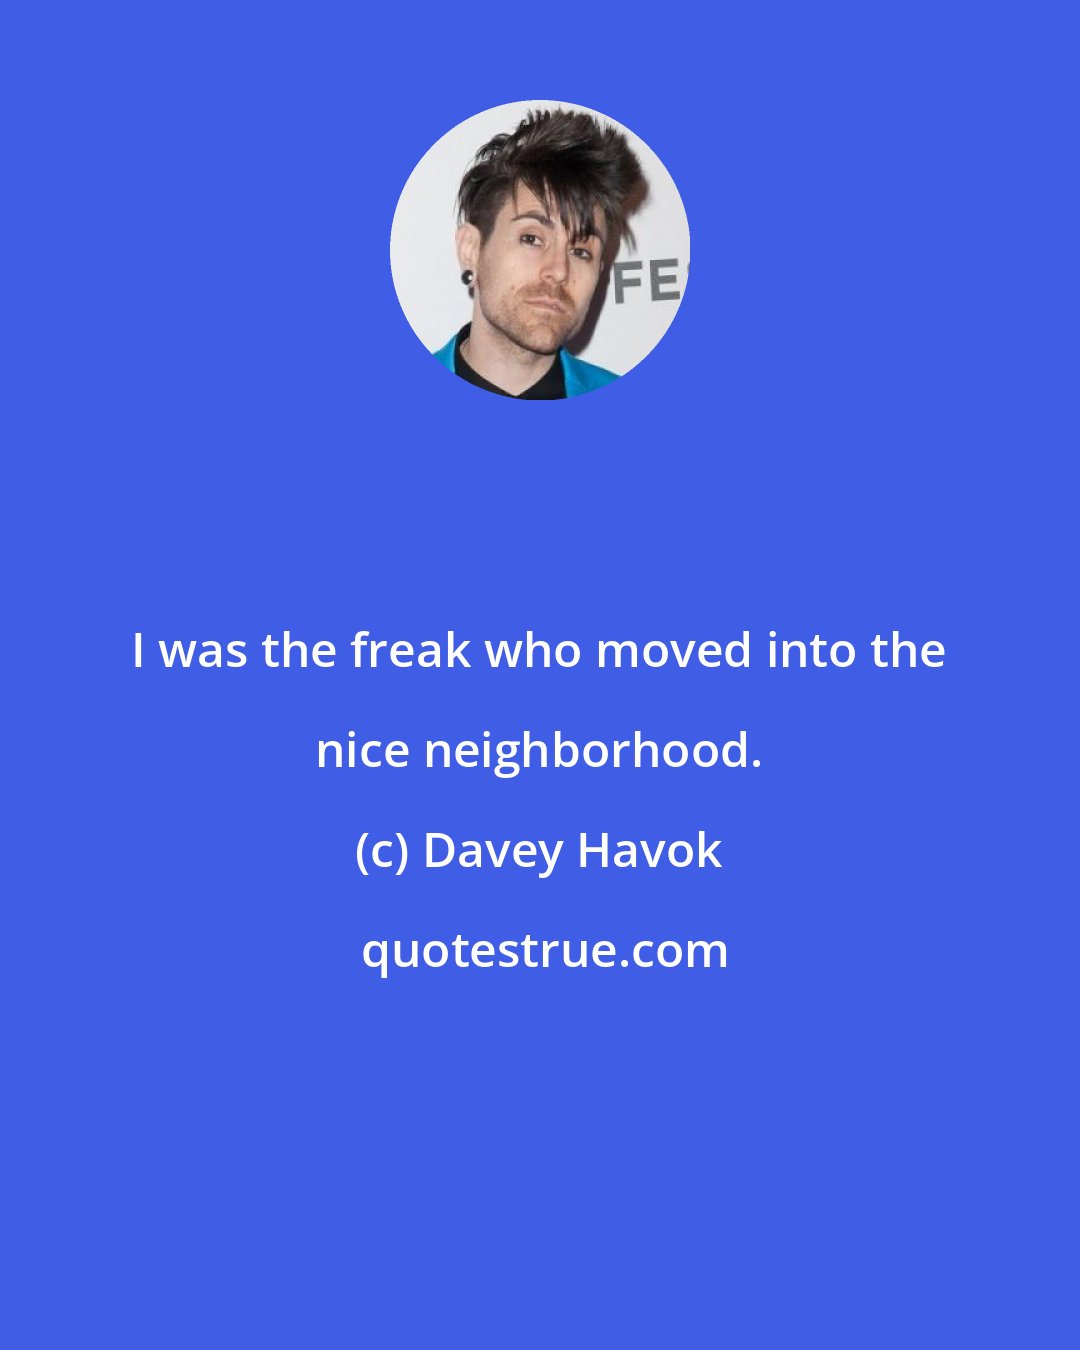 Davey Havok: I was the freak who moved into the nice neighborhood.